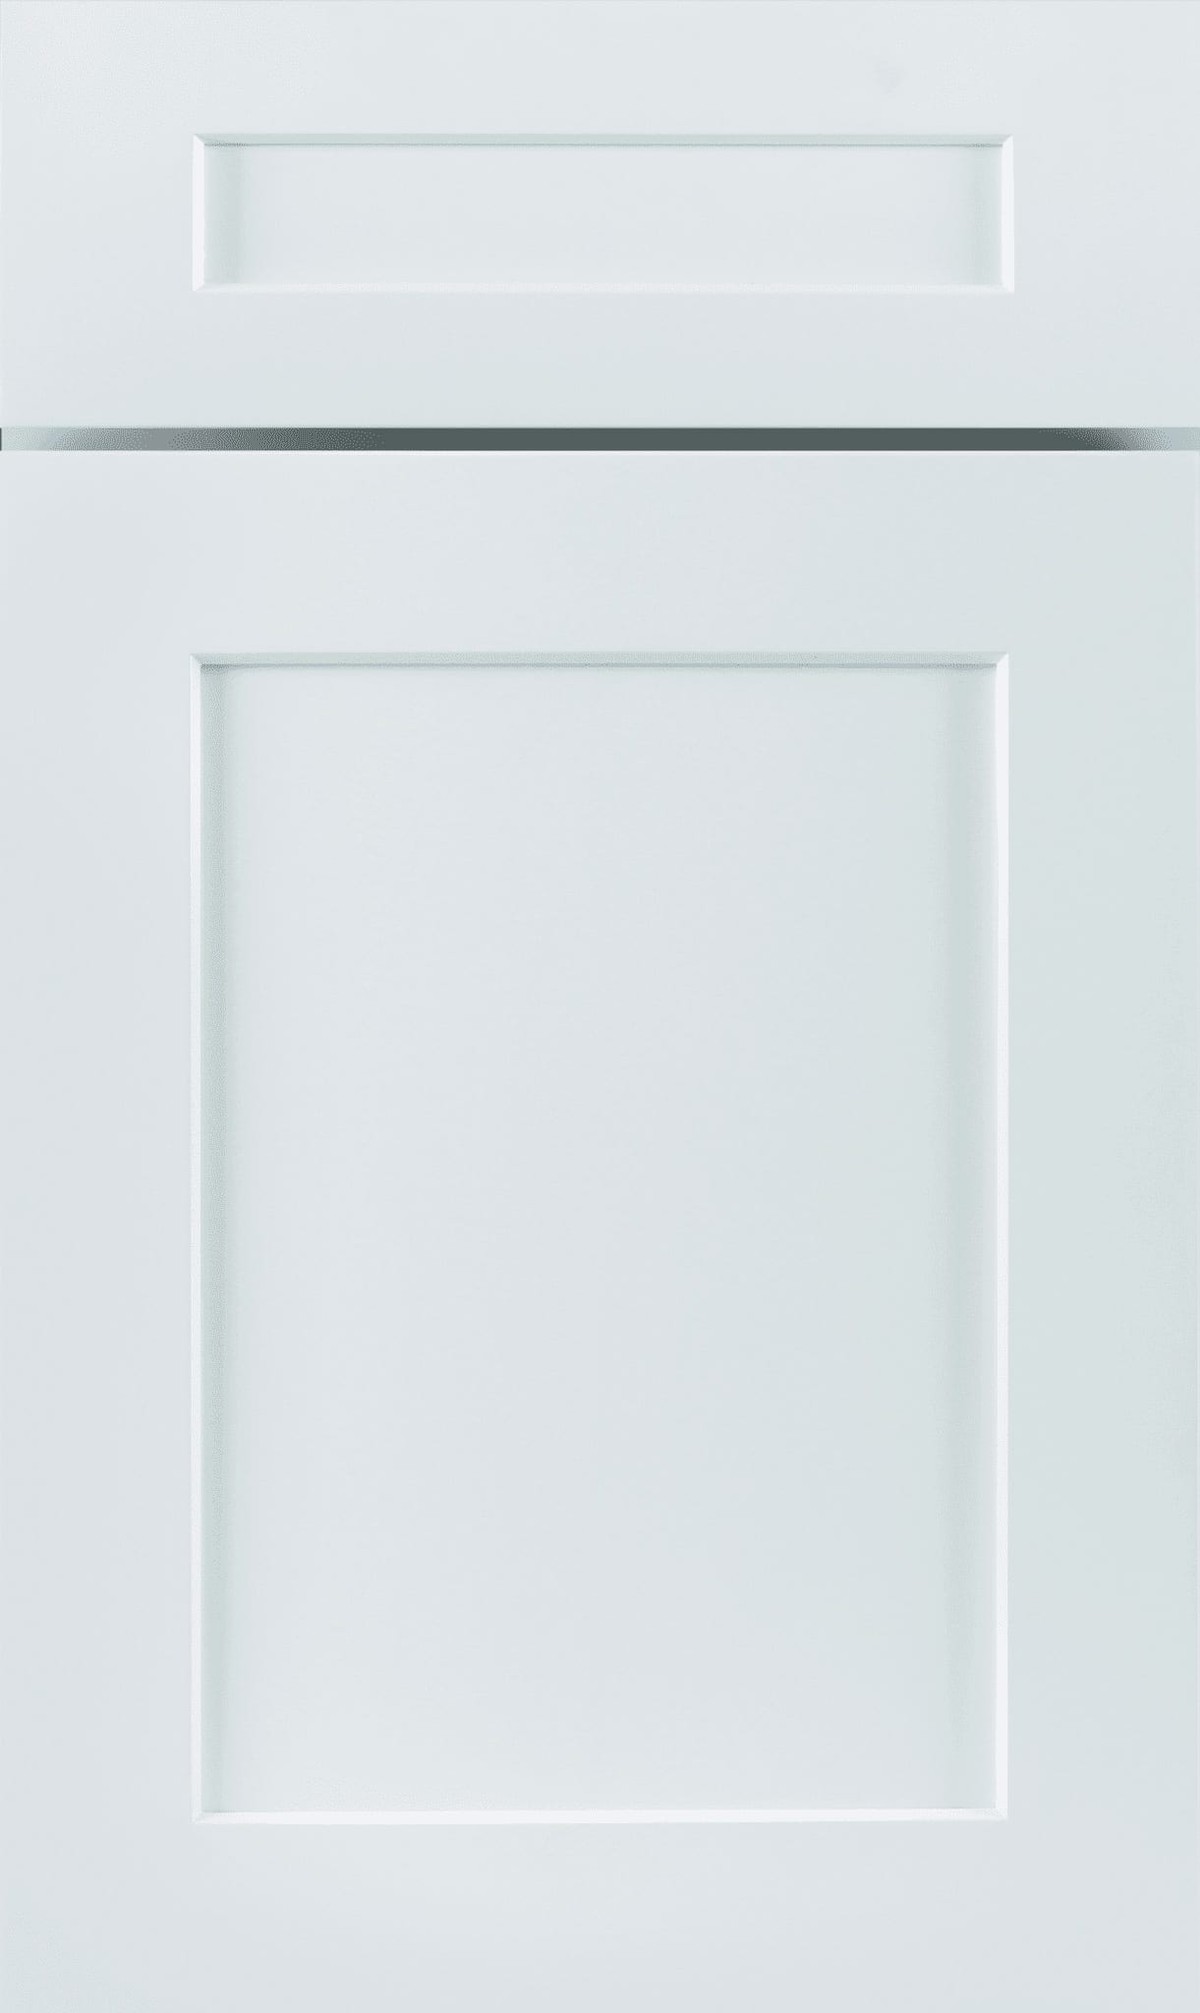 S8 — White door photo